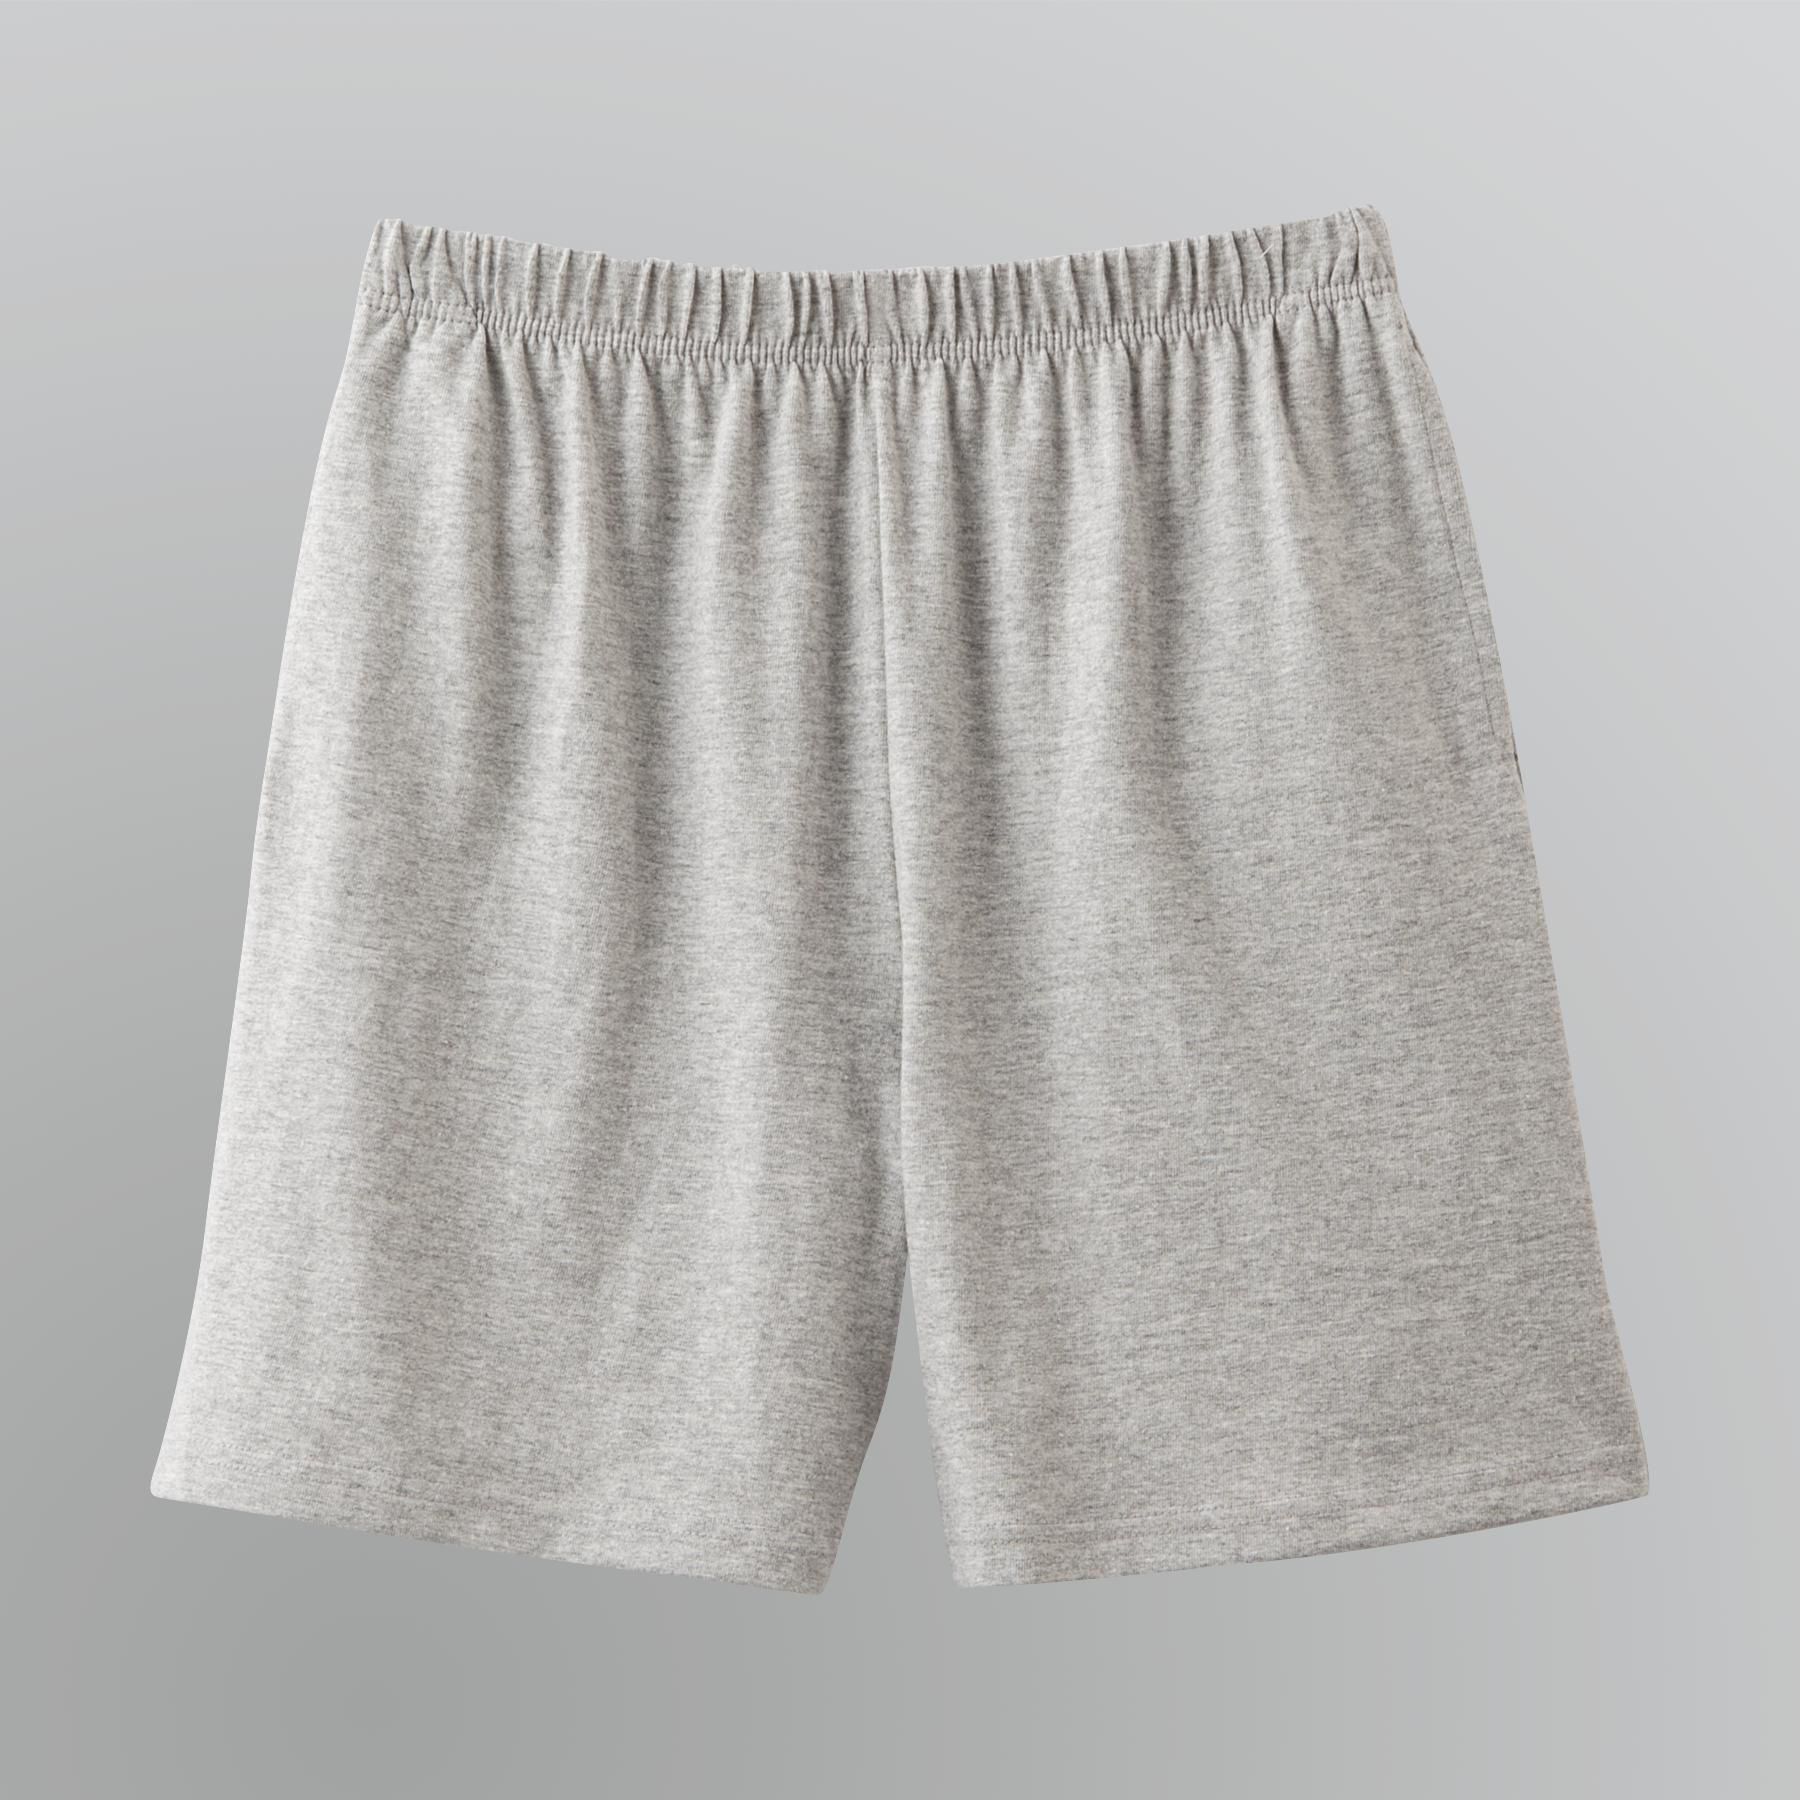 Basic Editions Women's Cotton Knit Shorts